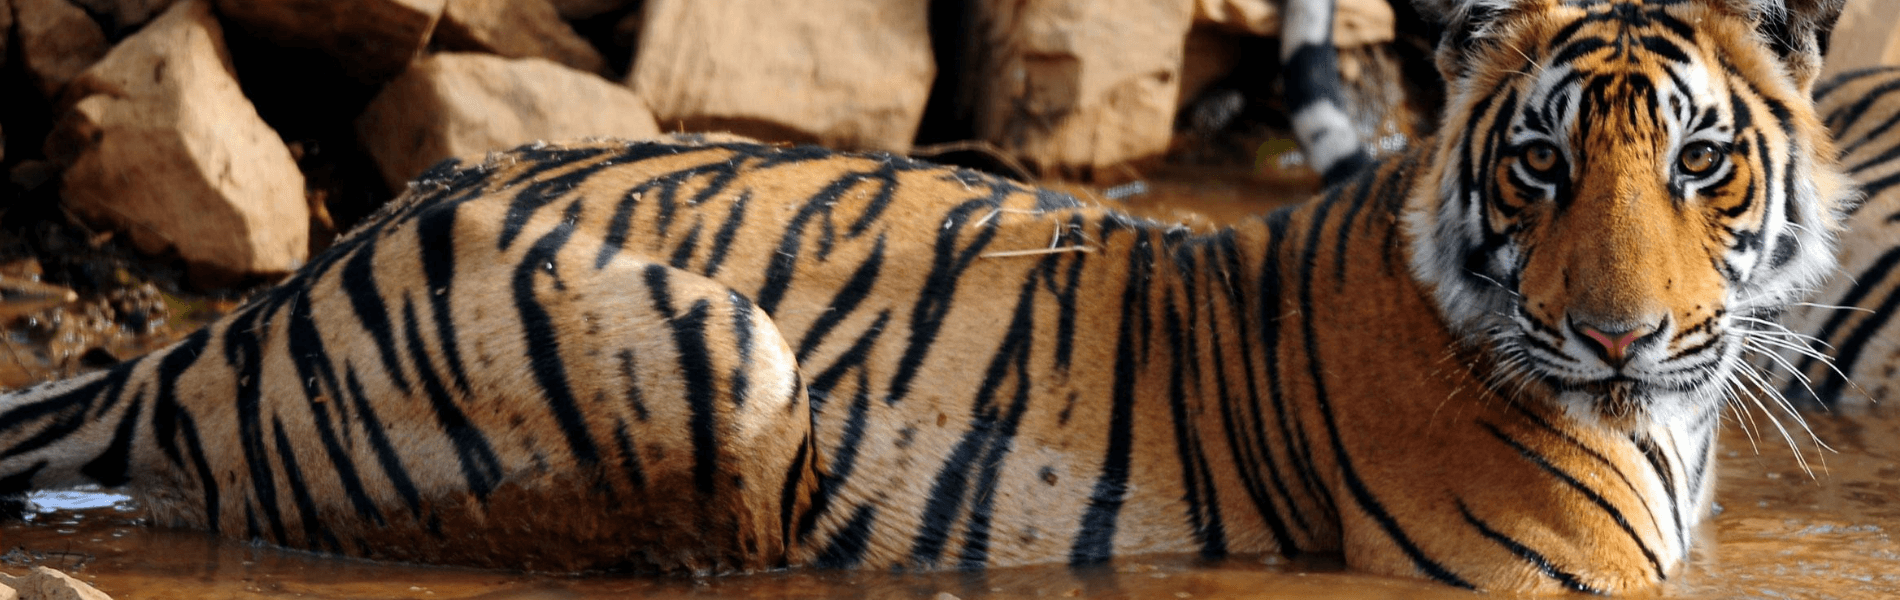 Golden Triangle with Tiger Safari, tiger safari tour india